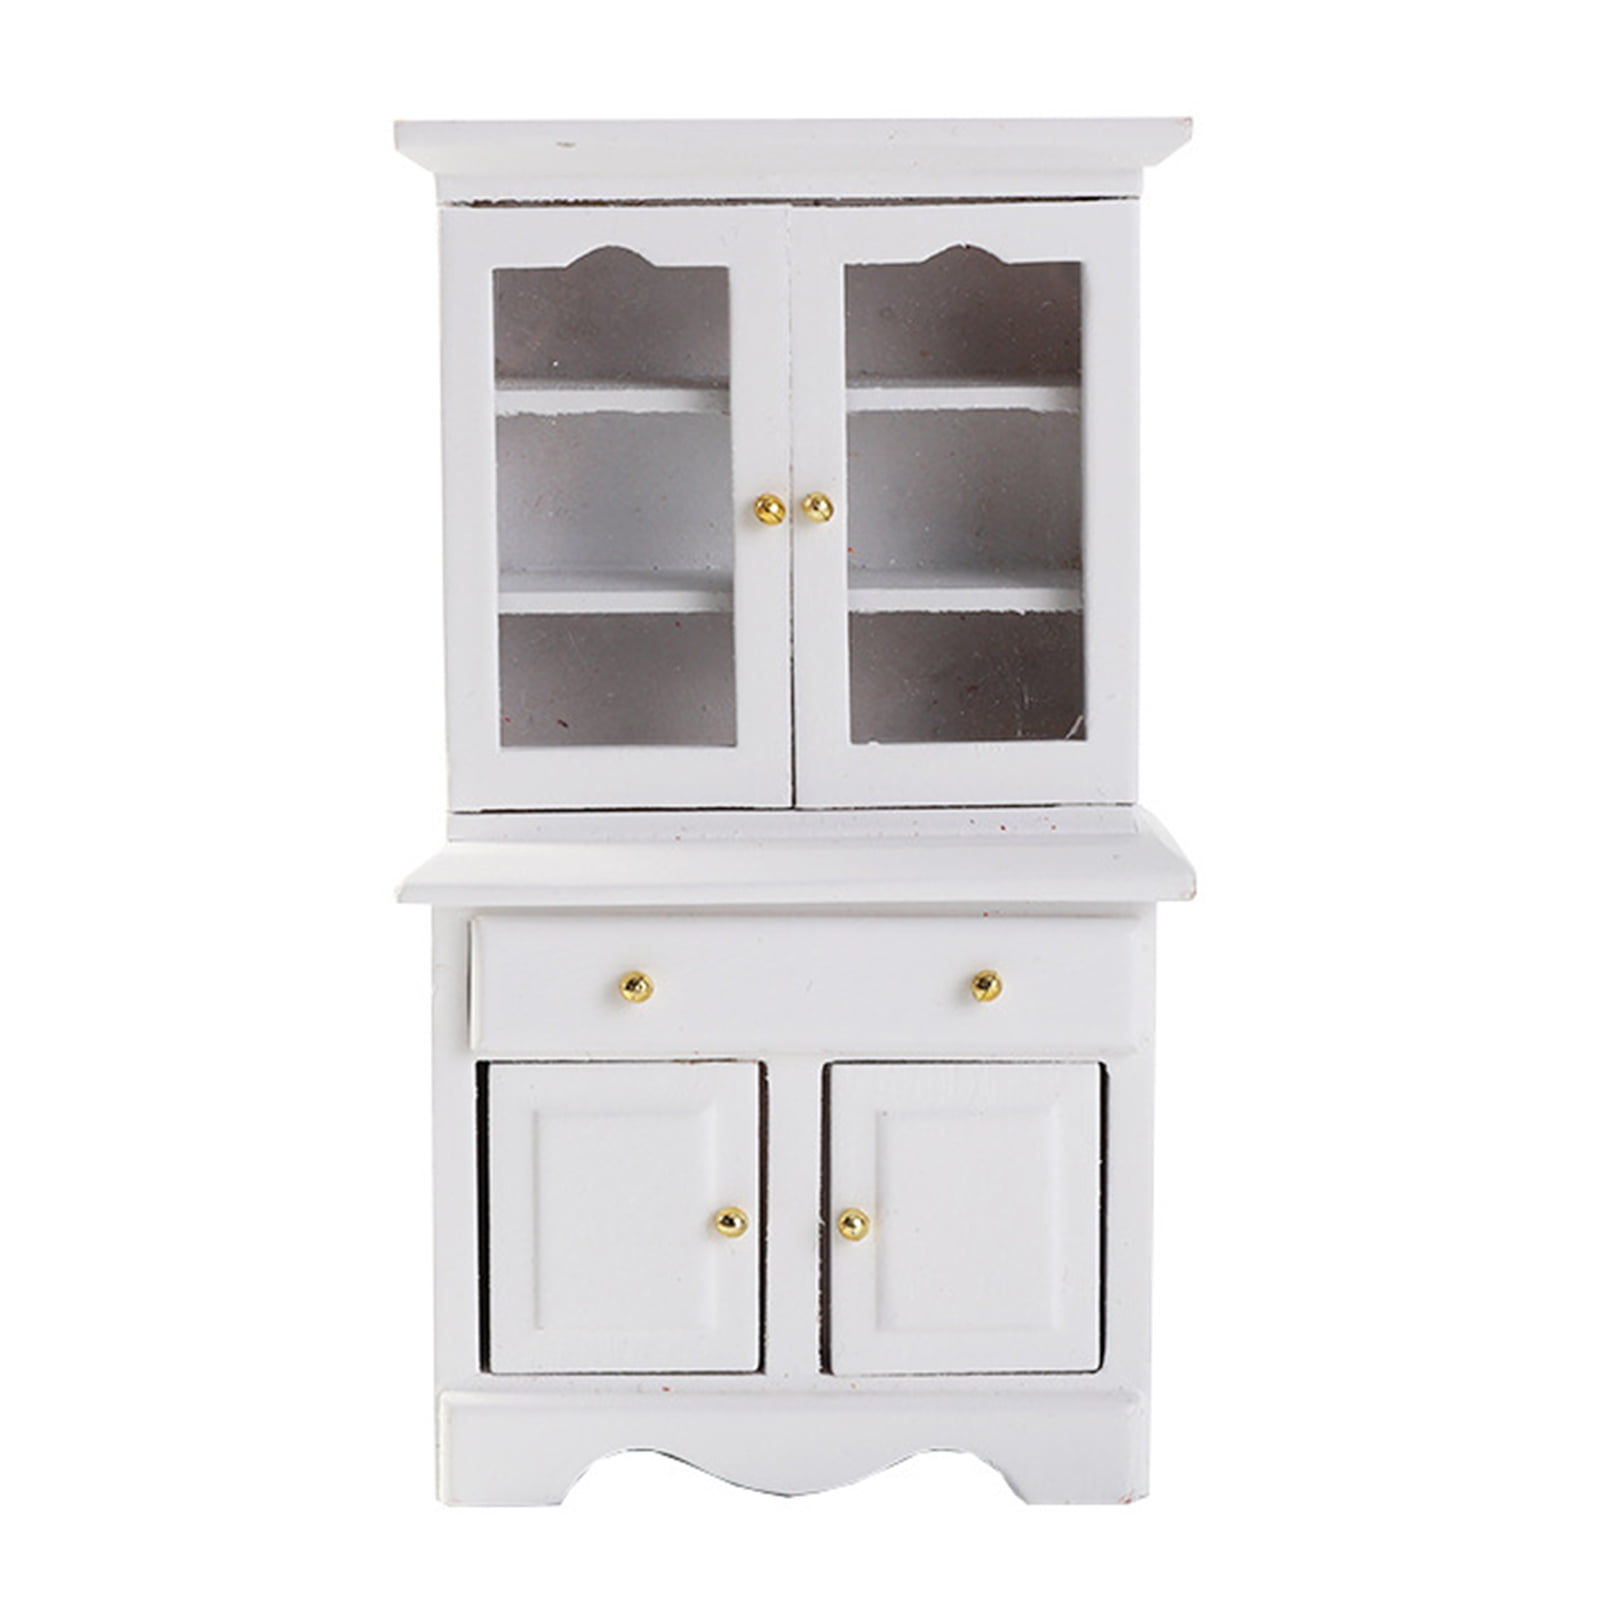 Details about   1/12 Dollhouse Miniature Furniture Wooden Bookshelf Cabinet Bookshelf Model 